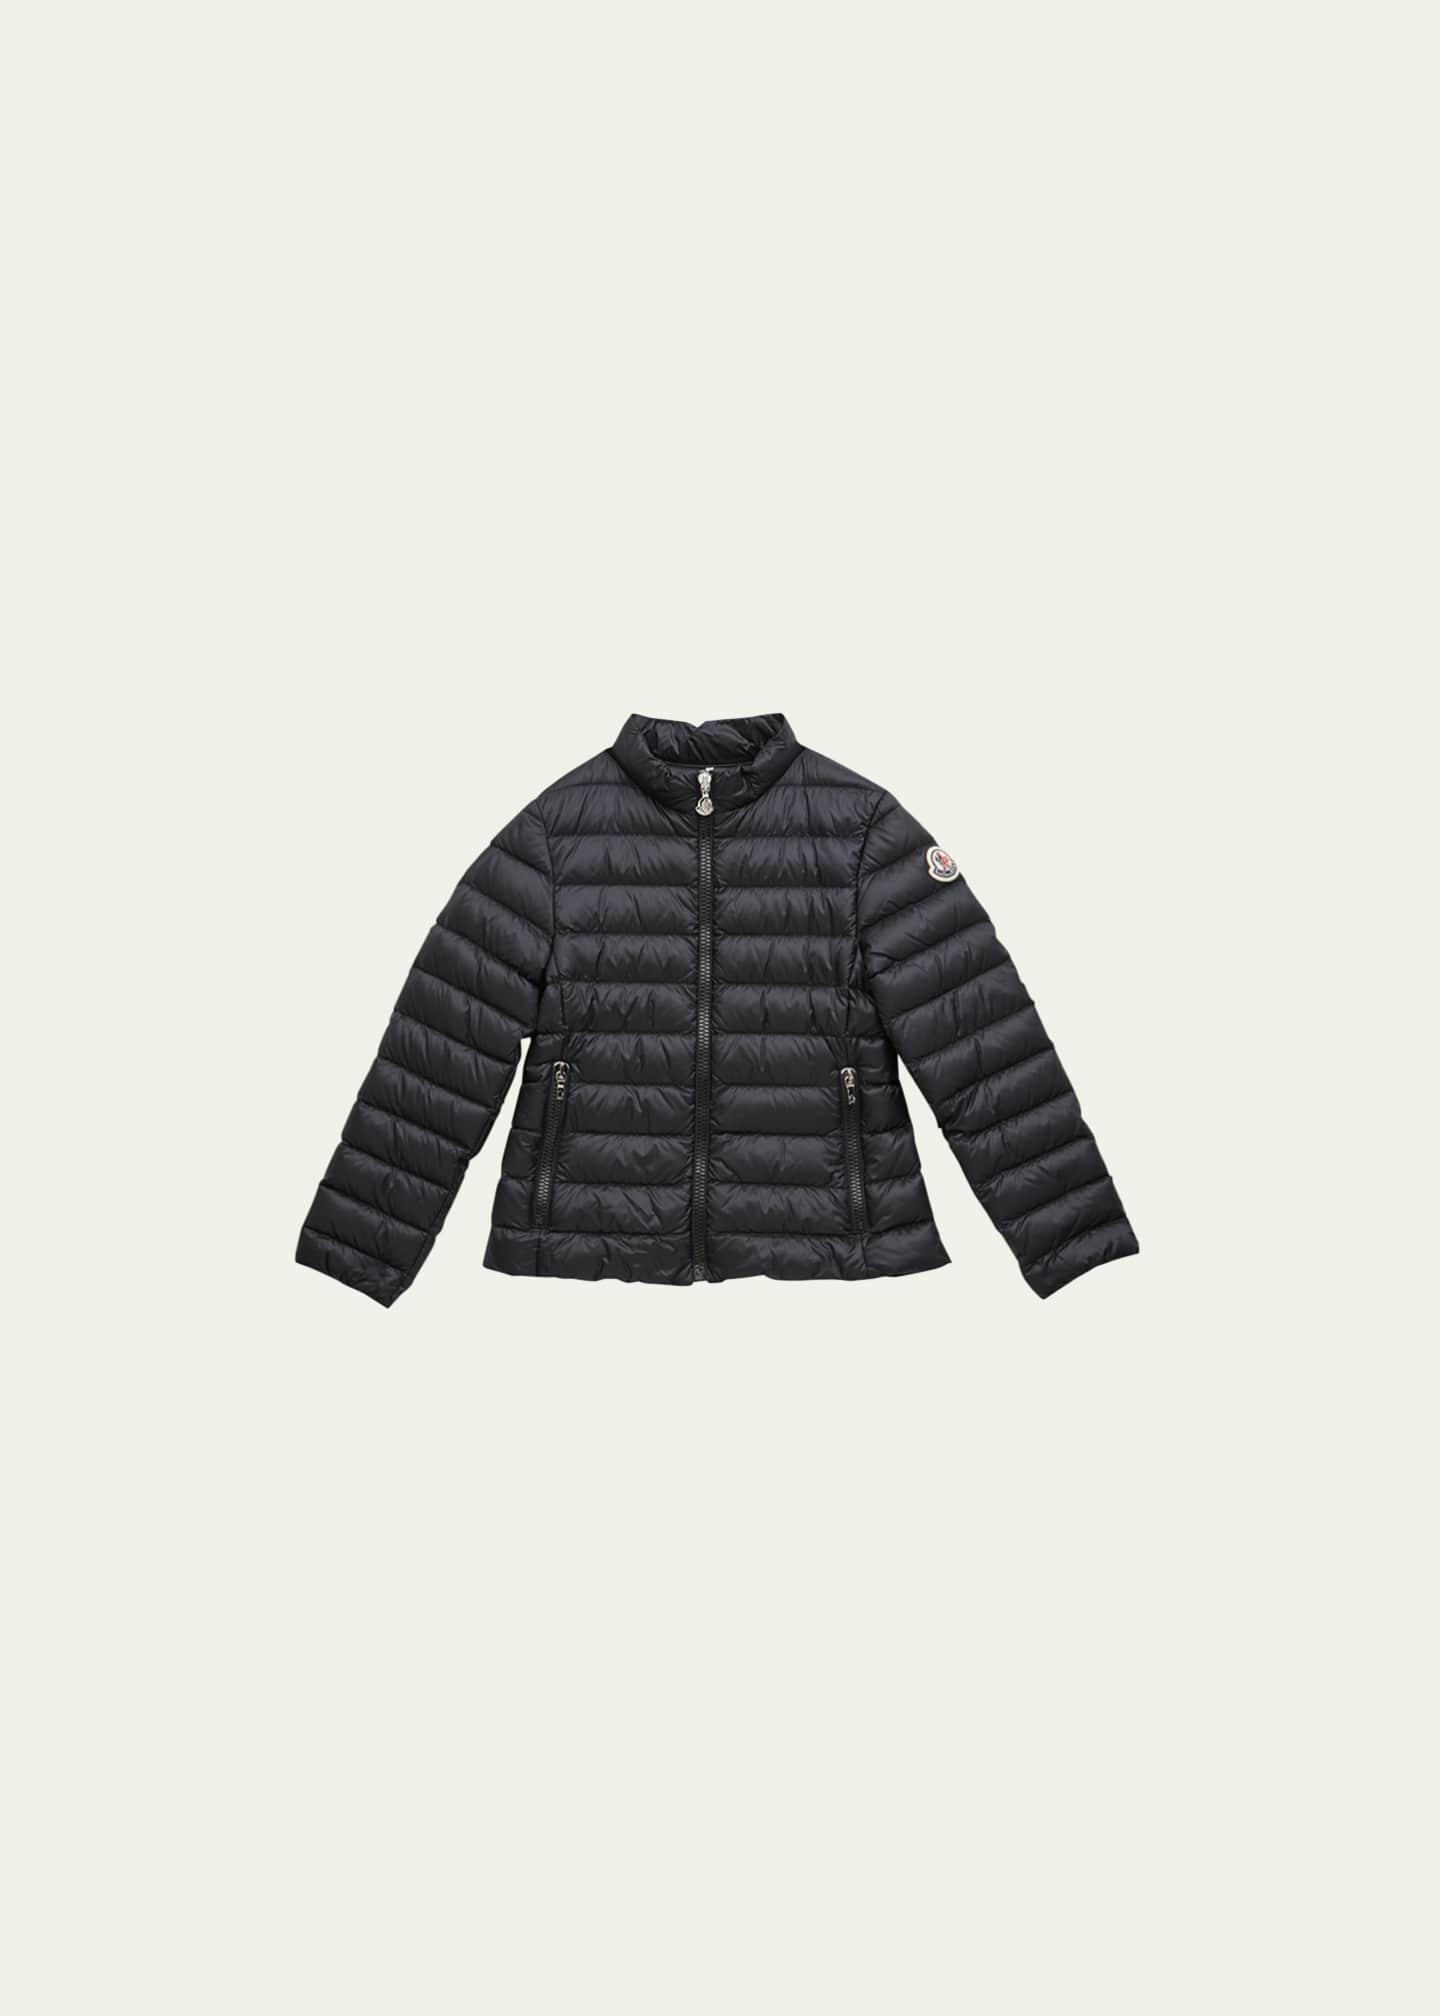 Moncler Girl's Kaukura Puffer Jacket, Size 8-14